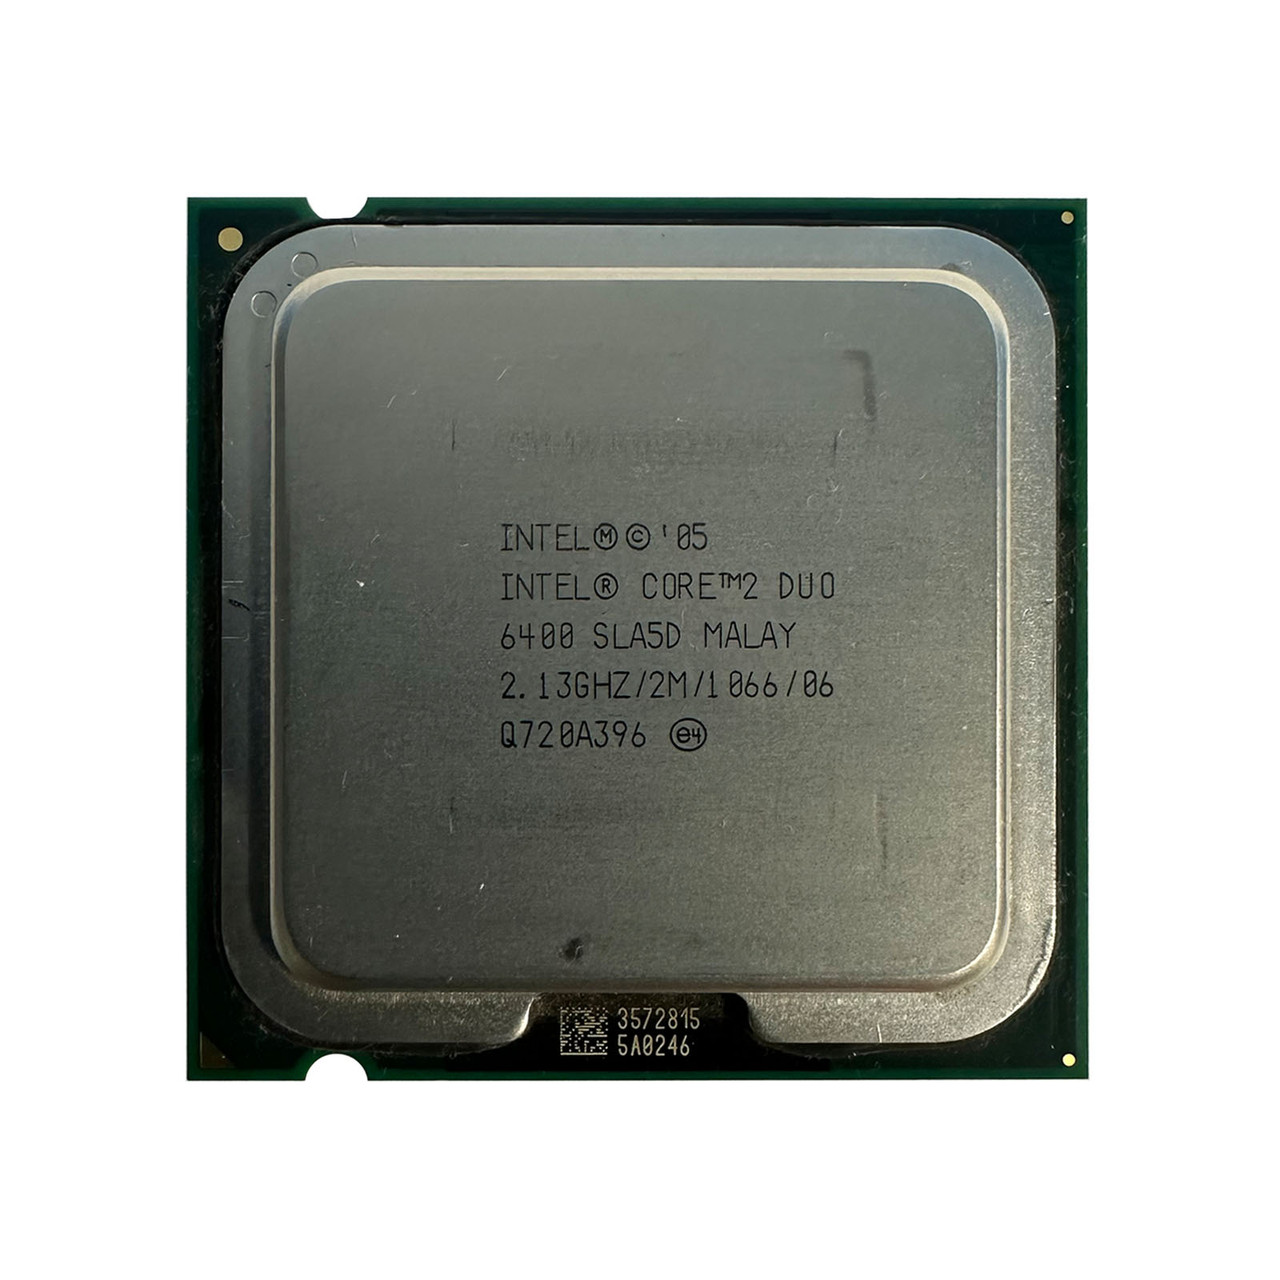 Intel SLA5D Core 2 Duo E6400 2.13Ghz 2MB 1066FSB Processor